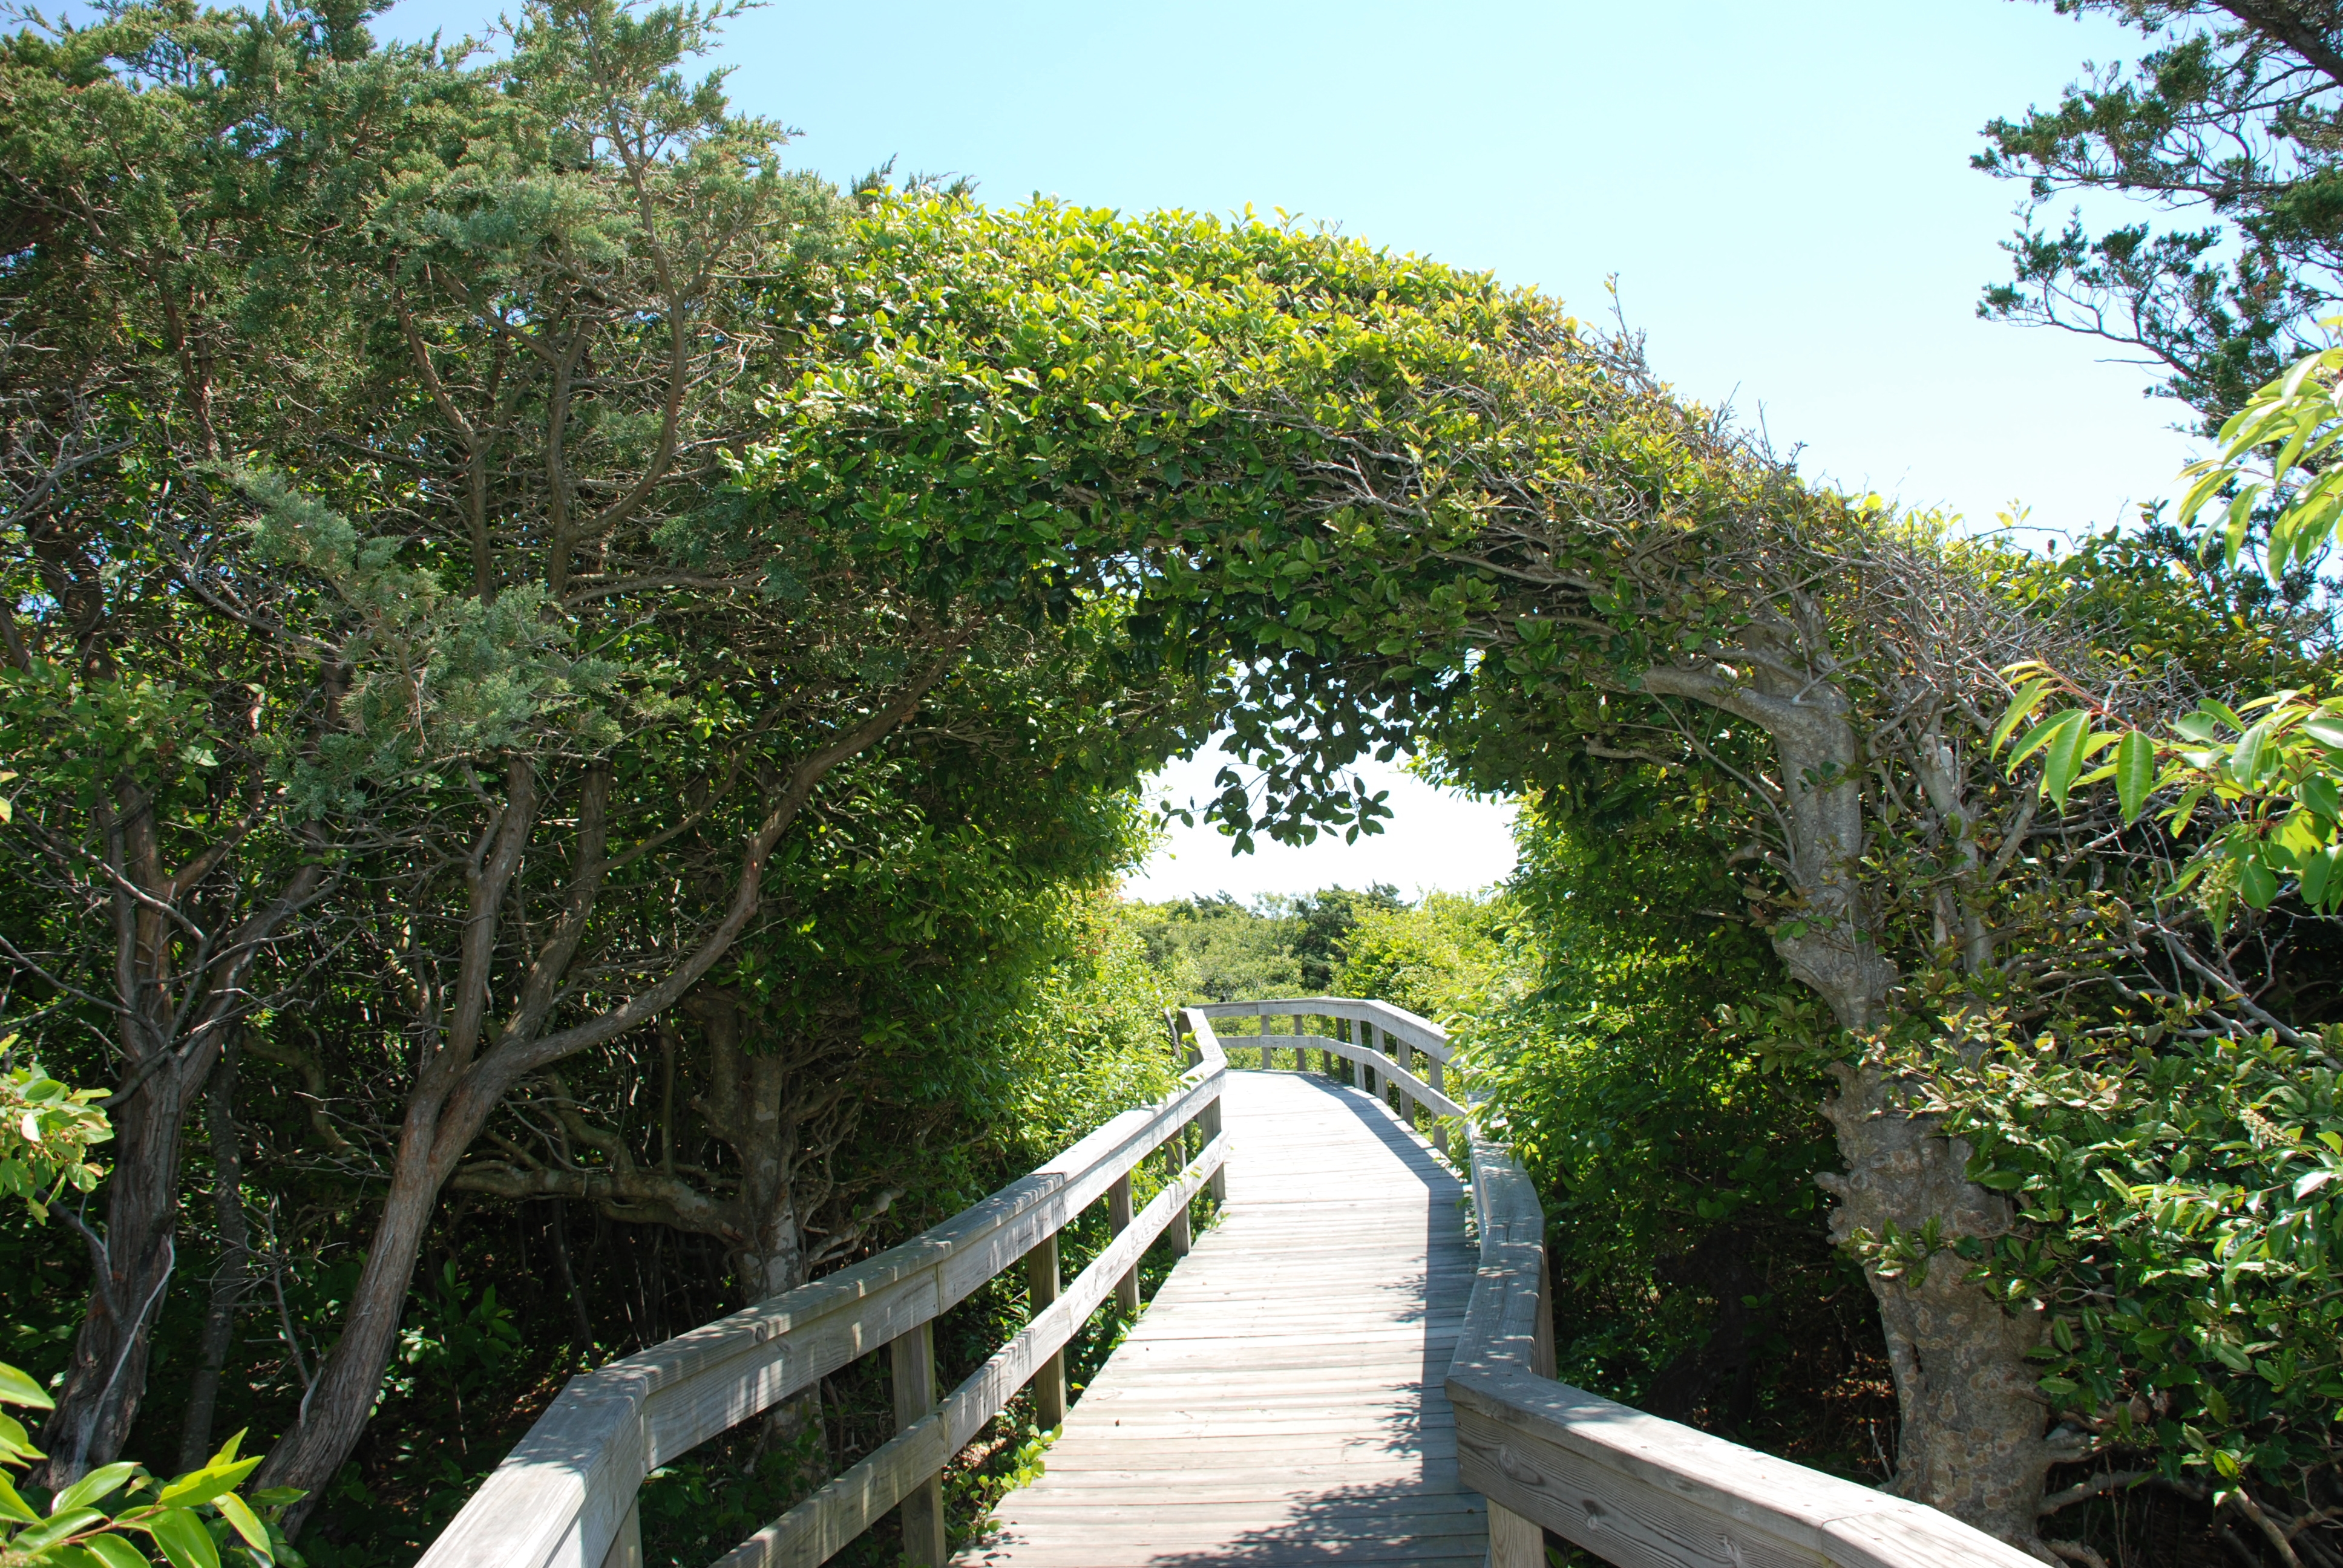 Photo of the boardwalk at Sunken Forest, Fire Island.